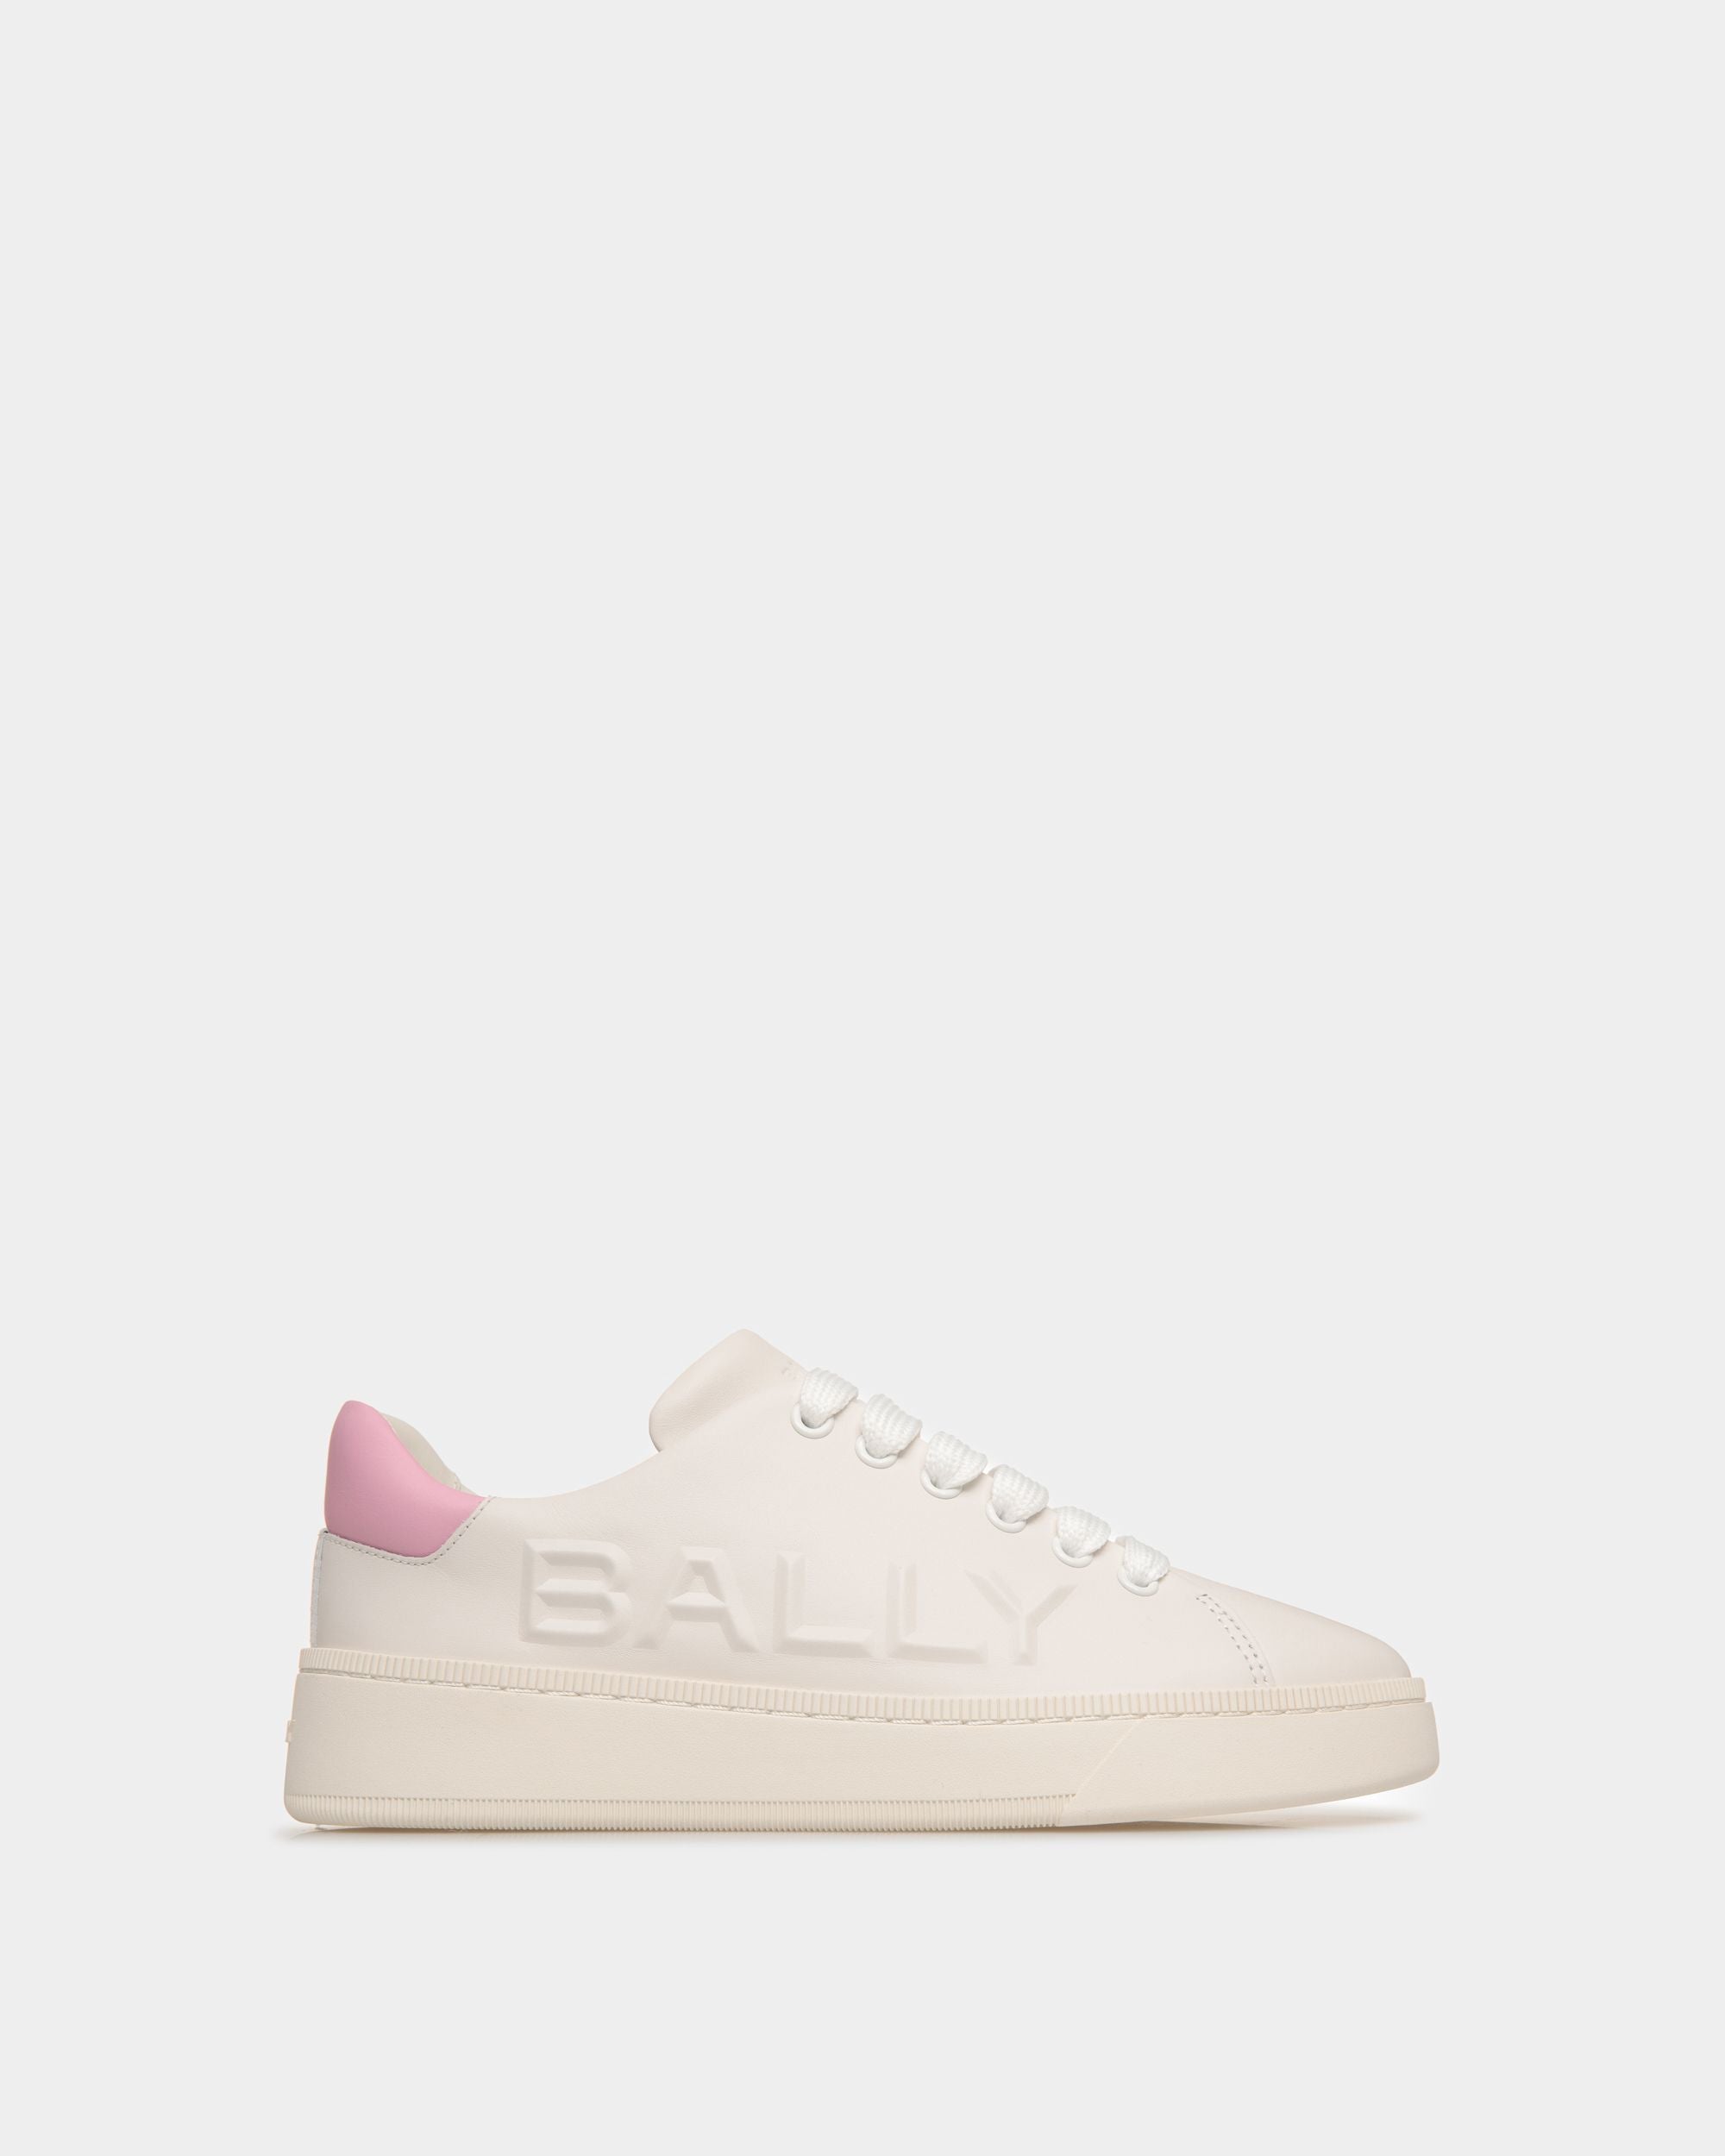 Raise | Sneaker da donna in pelle bianca e rosa | Bally | Still Life Laterale